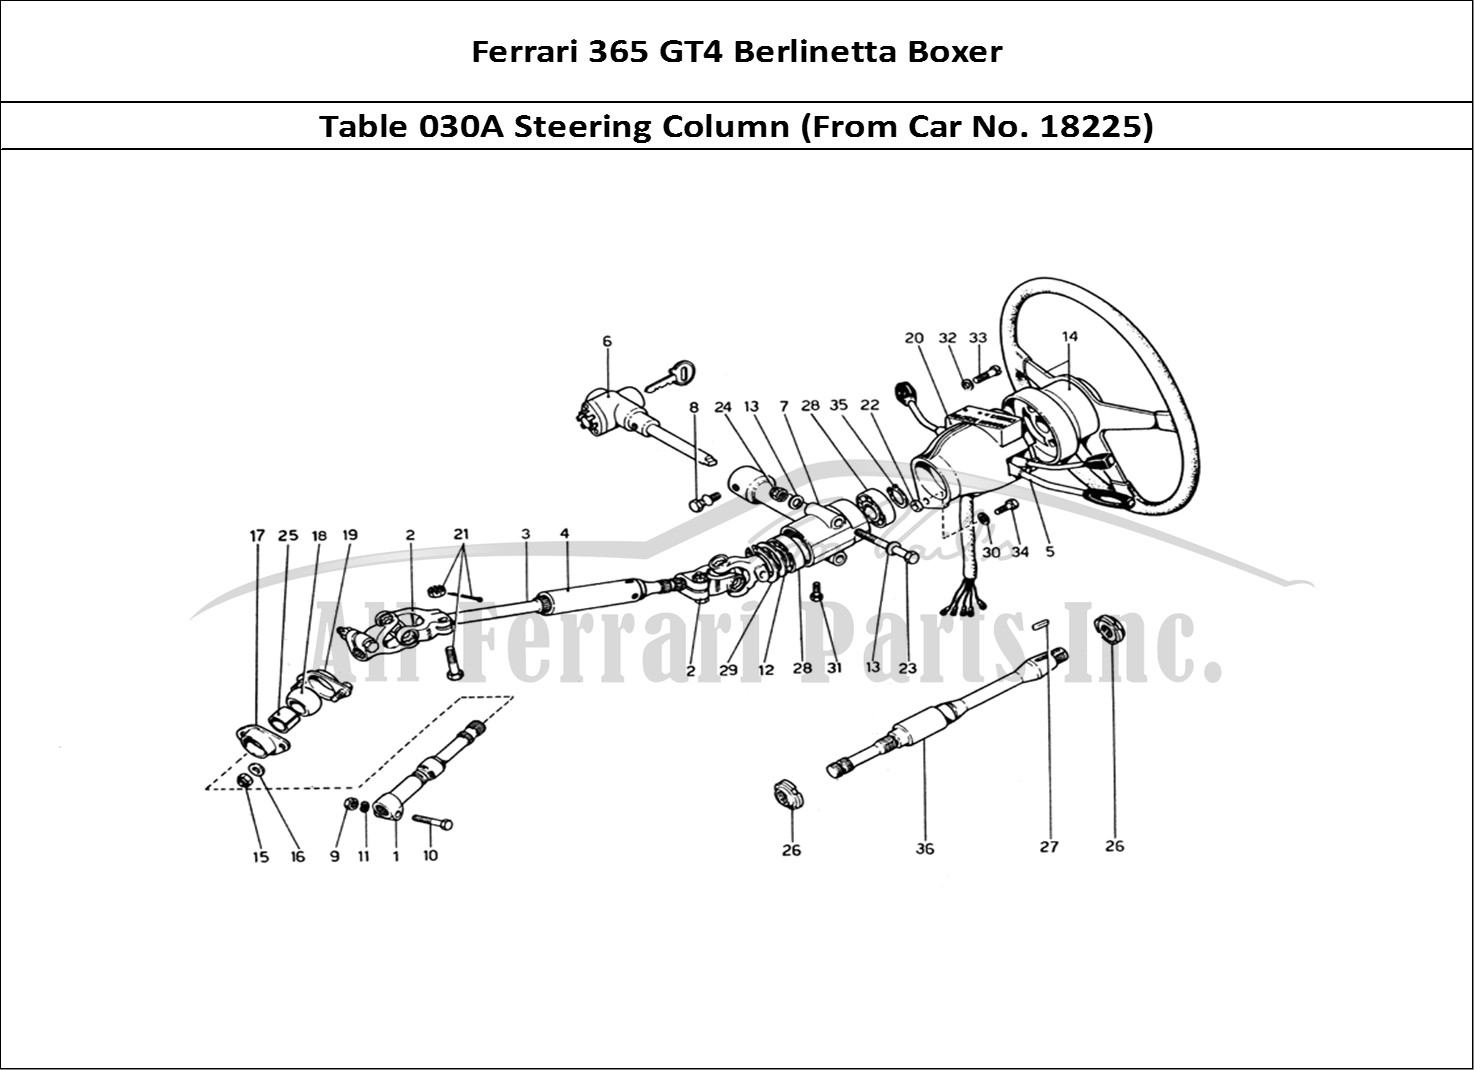 Ferrari Parts Ferrari 365 GT4 Berlinetta Boxer Page 030 Steering Column (From Car